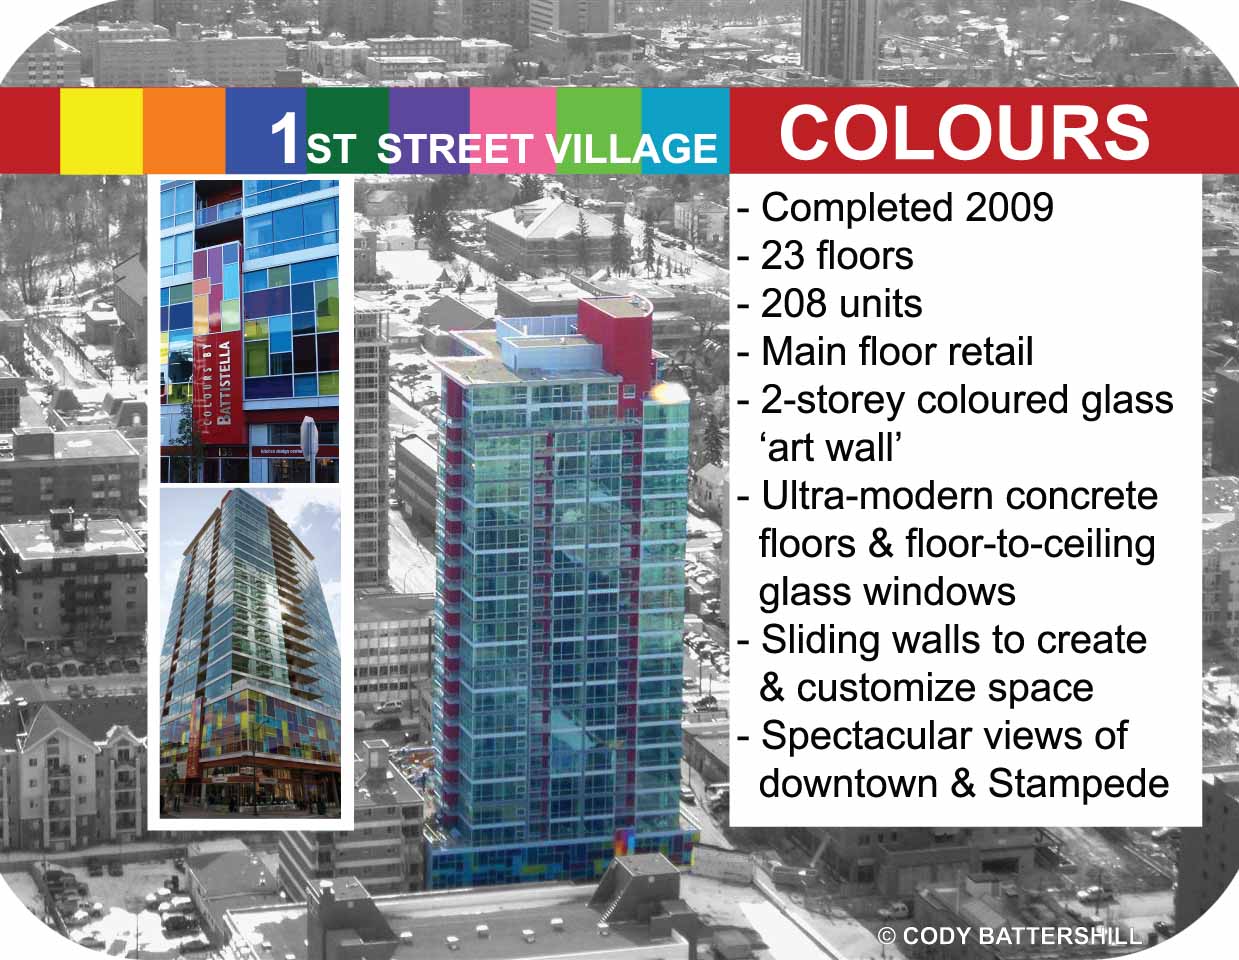 Colours condos Calgary Beltline - infographic